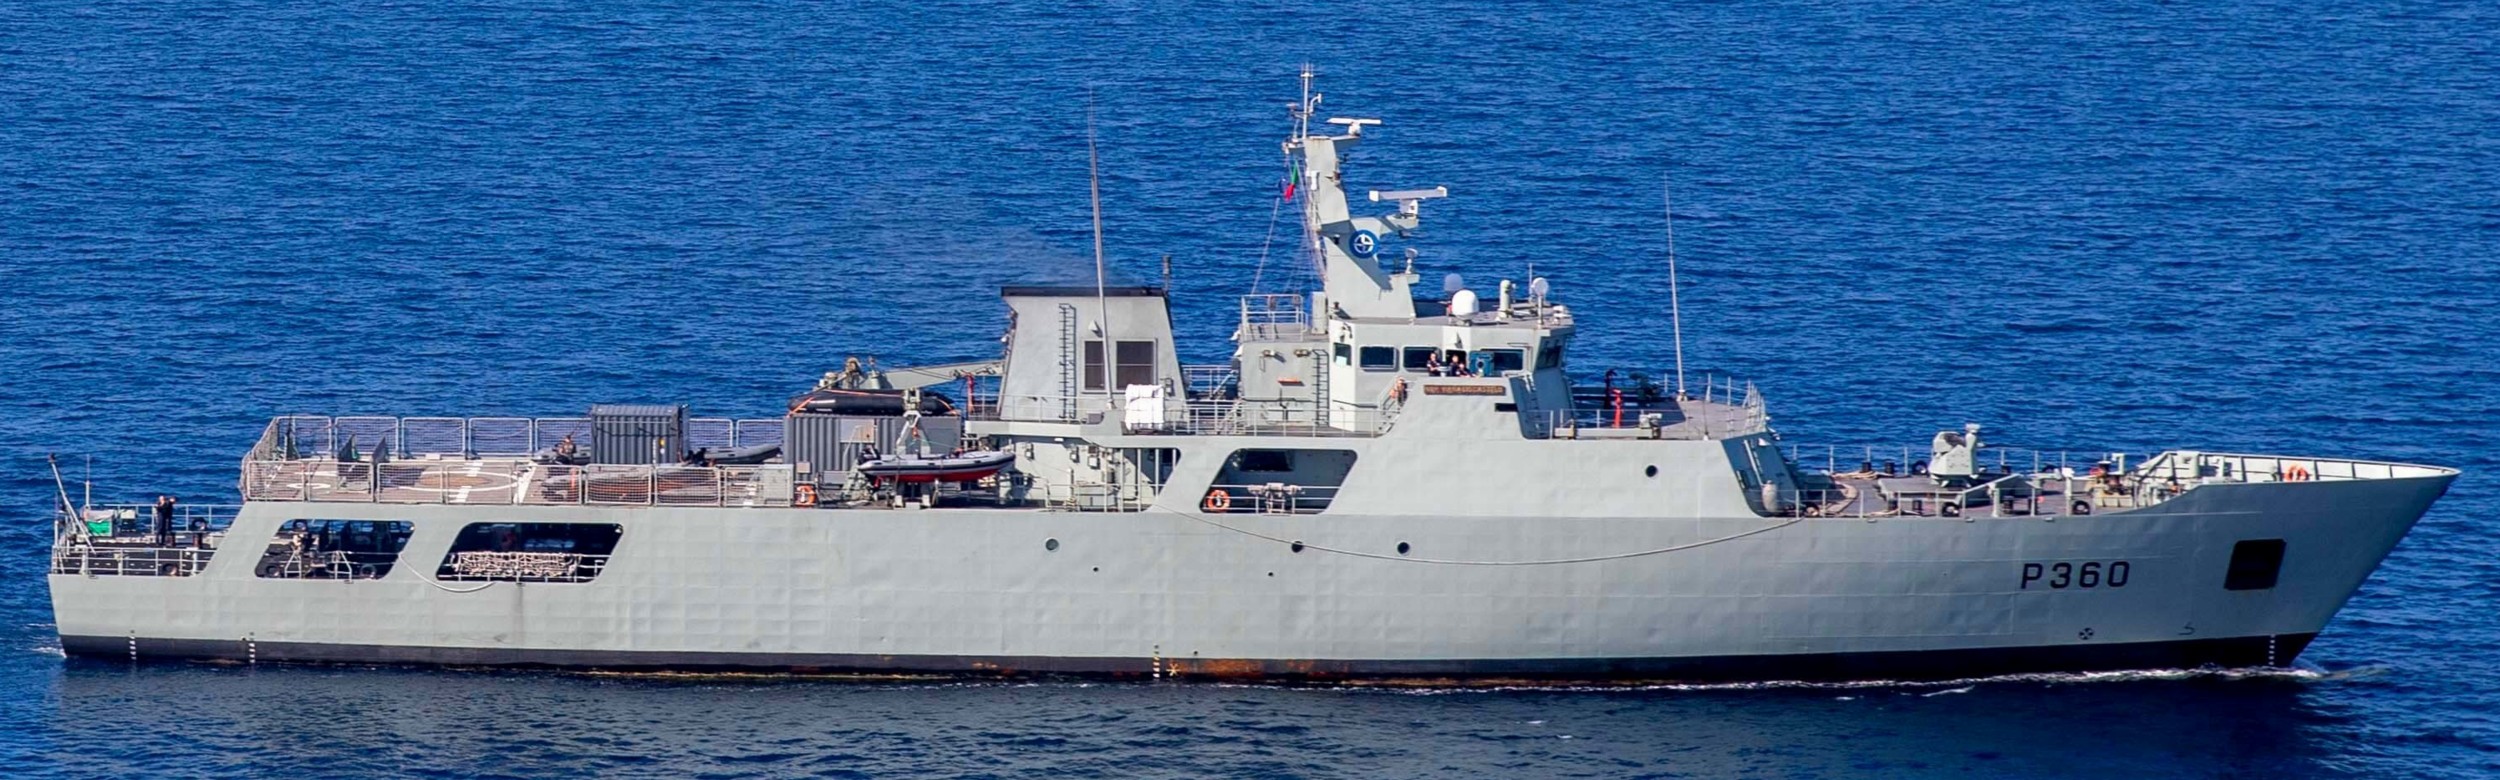 viana do castelo class offshore patrol vessel opv npo2000 portuguese navy marinha 02x